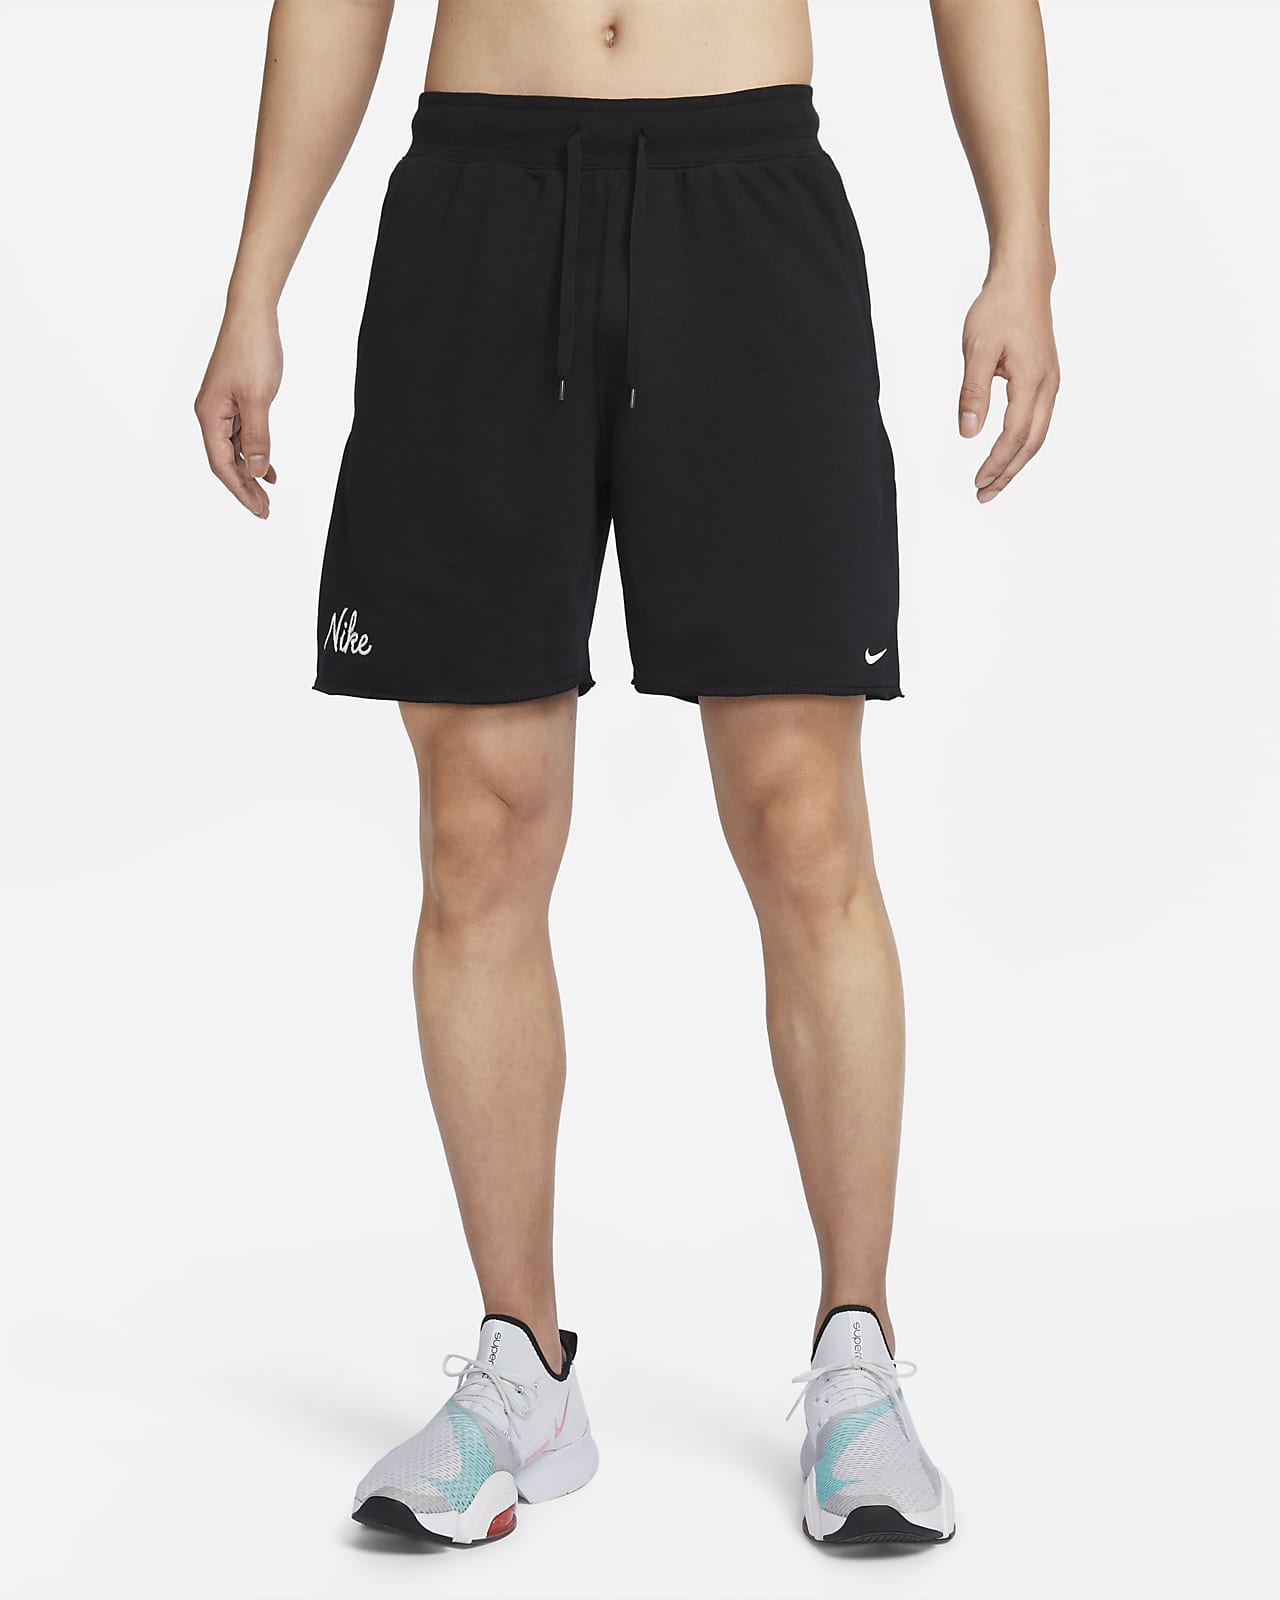 Mens Fleece Shorts Jersey Plain Elasticated Gym Sweat Plus Jogger